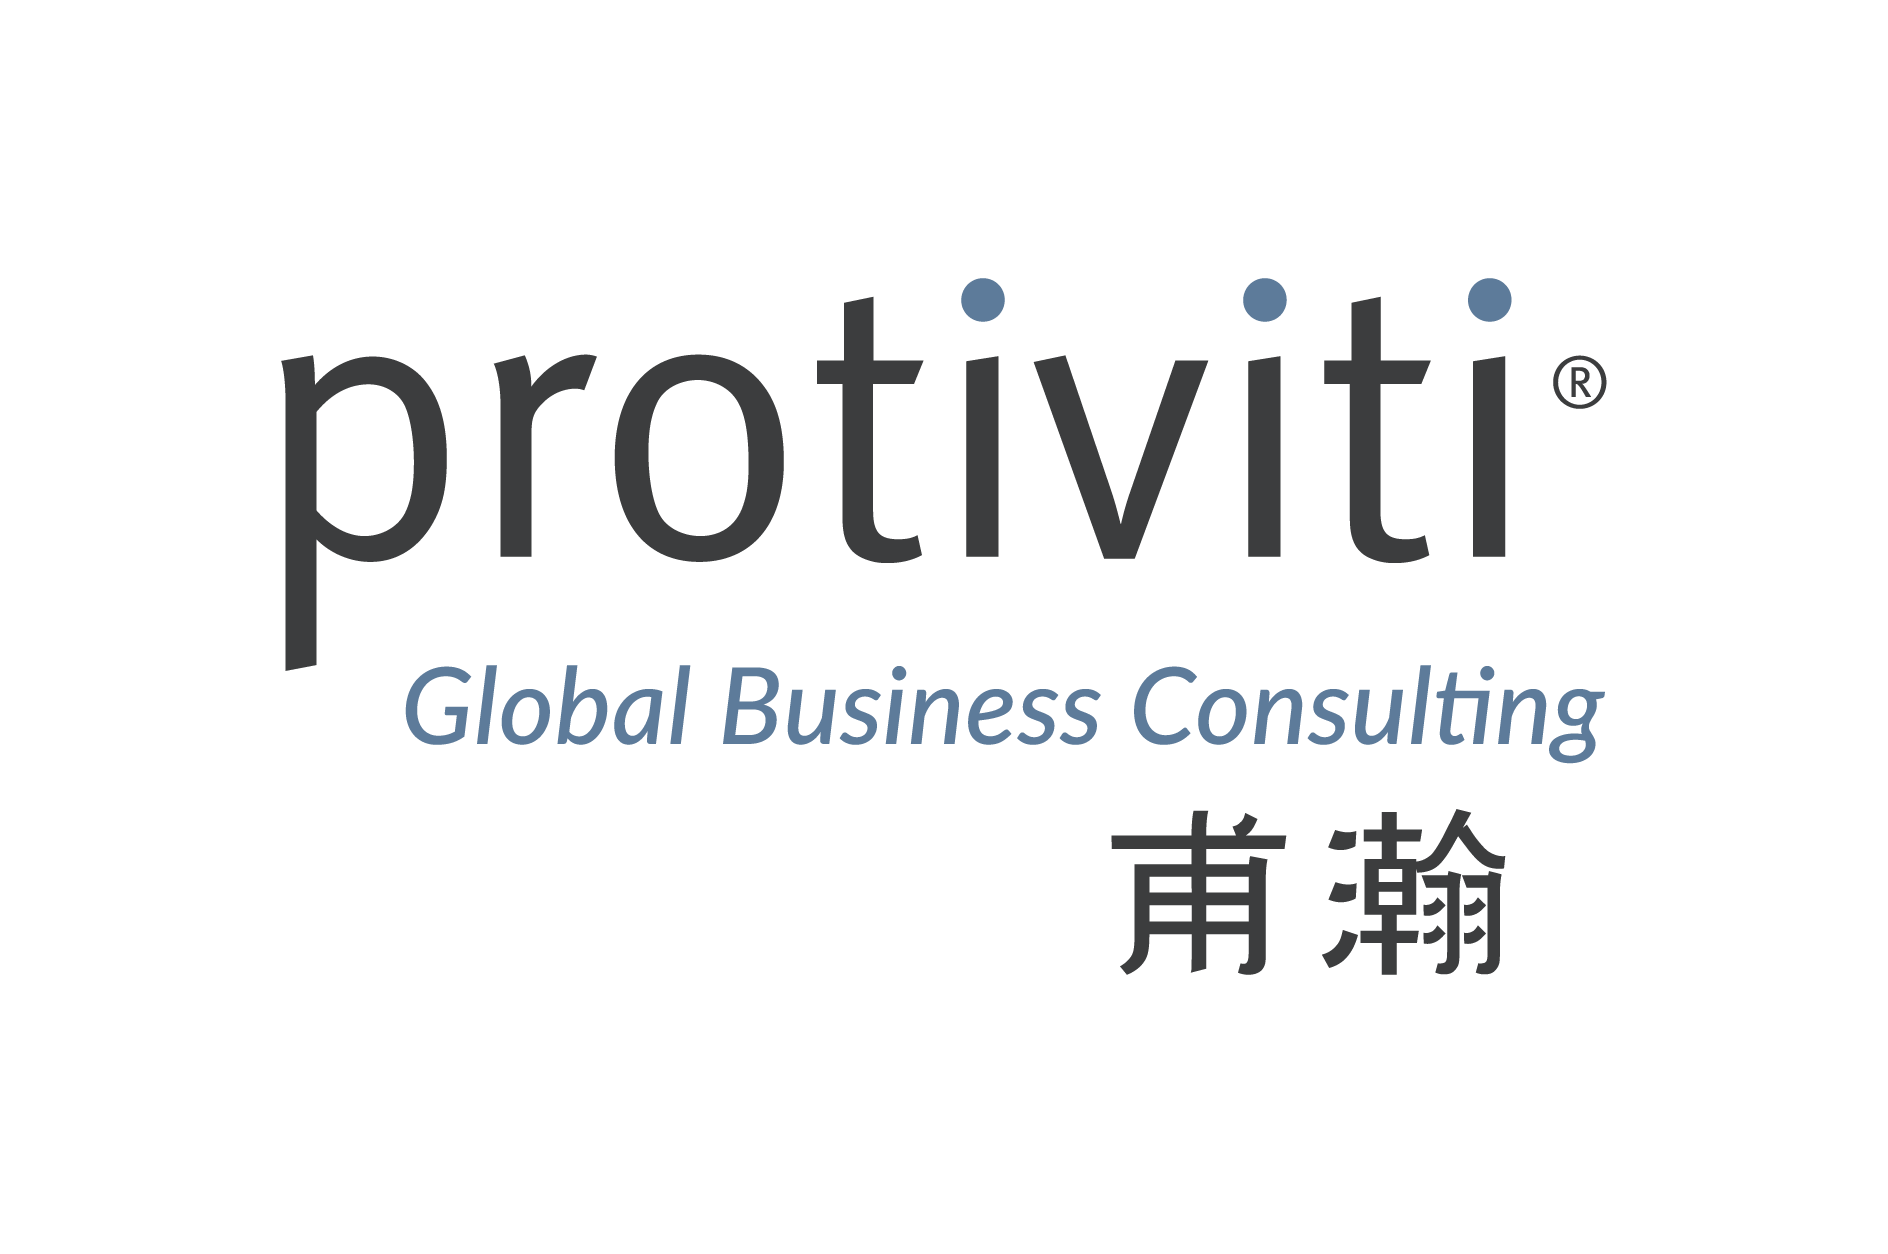 Protiviti Global Buisiness Consulting in China